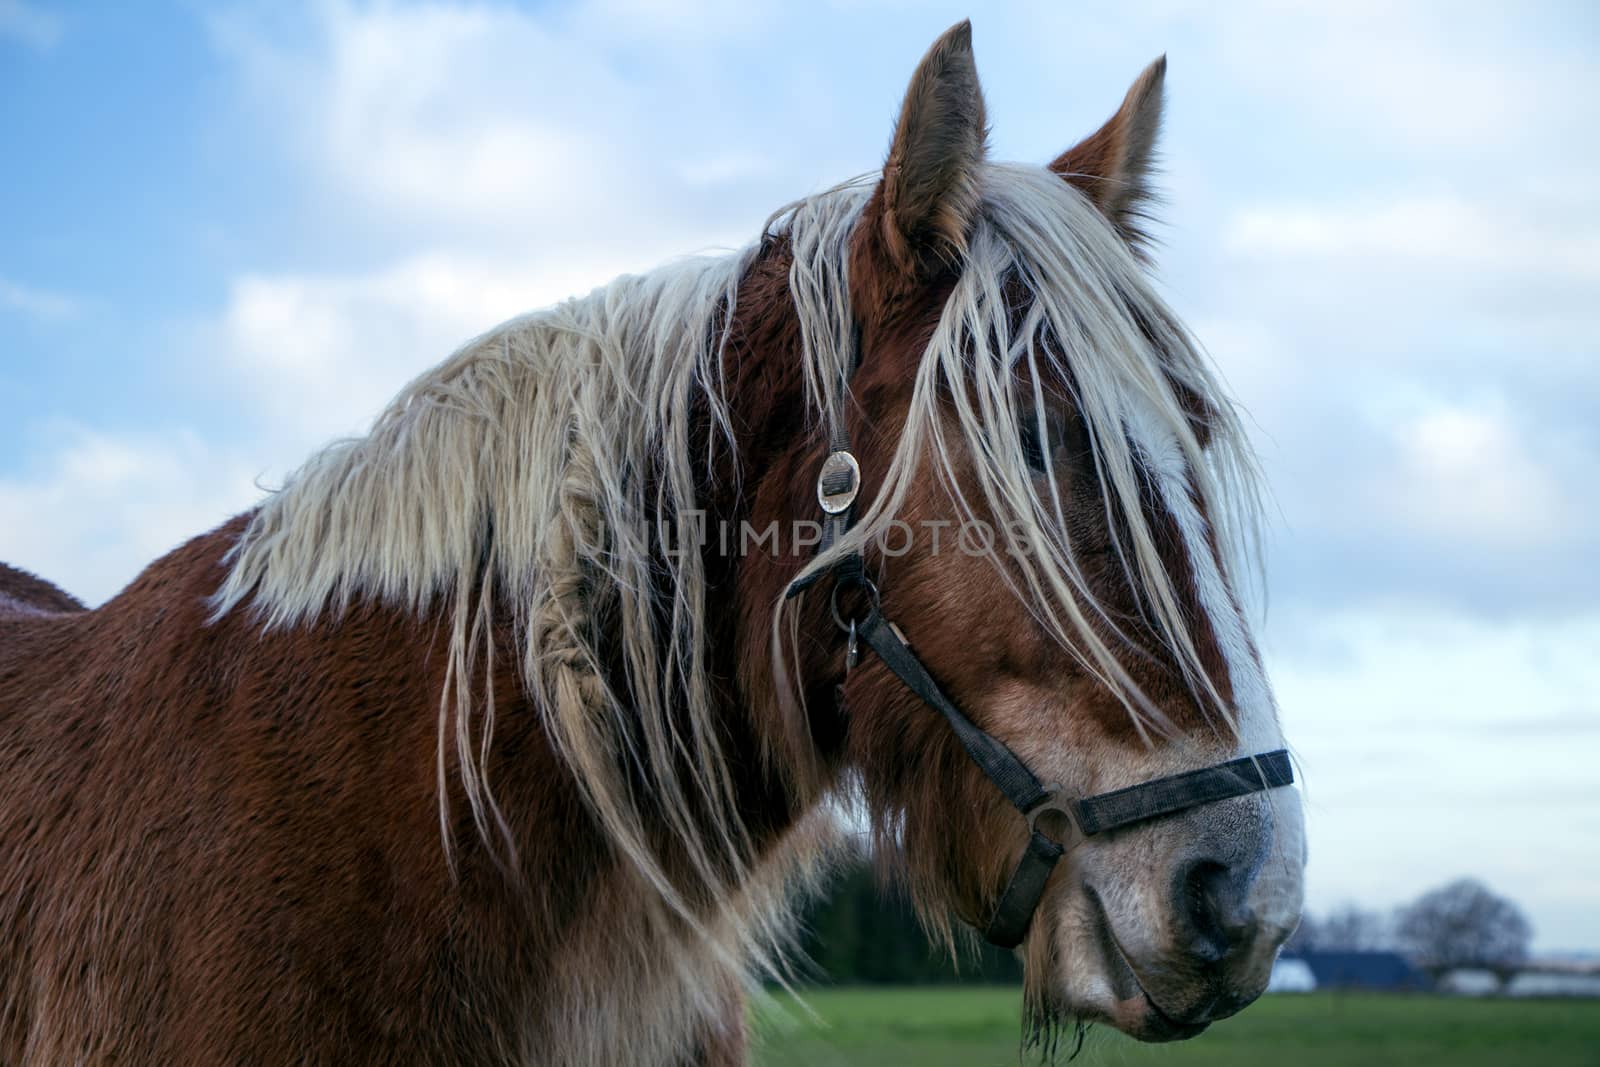 Jutland horse closeup on a cloudy day. Equus ferus caballus.